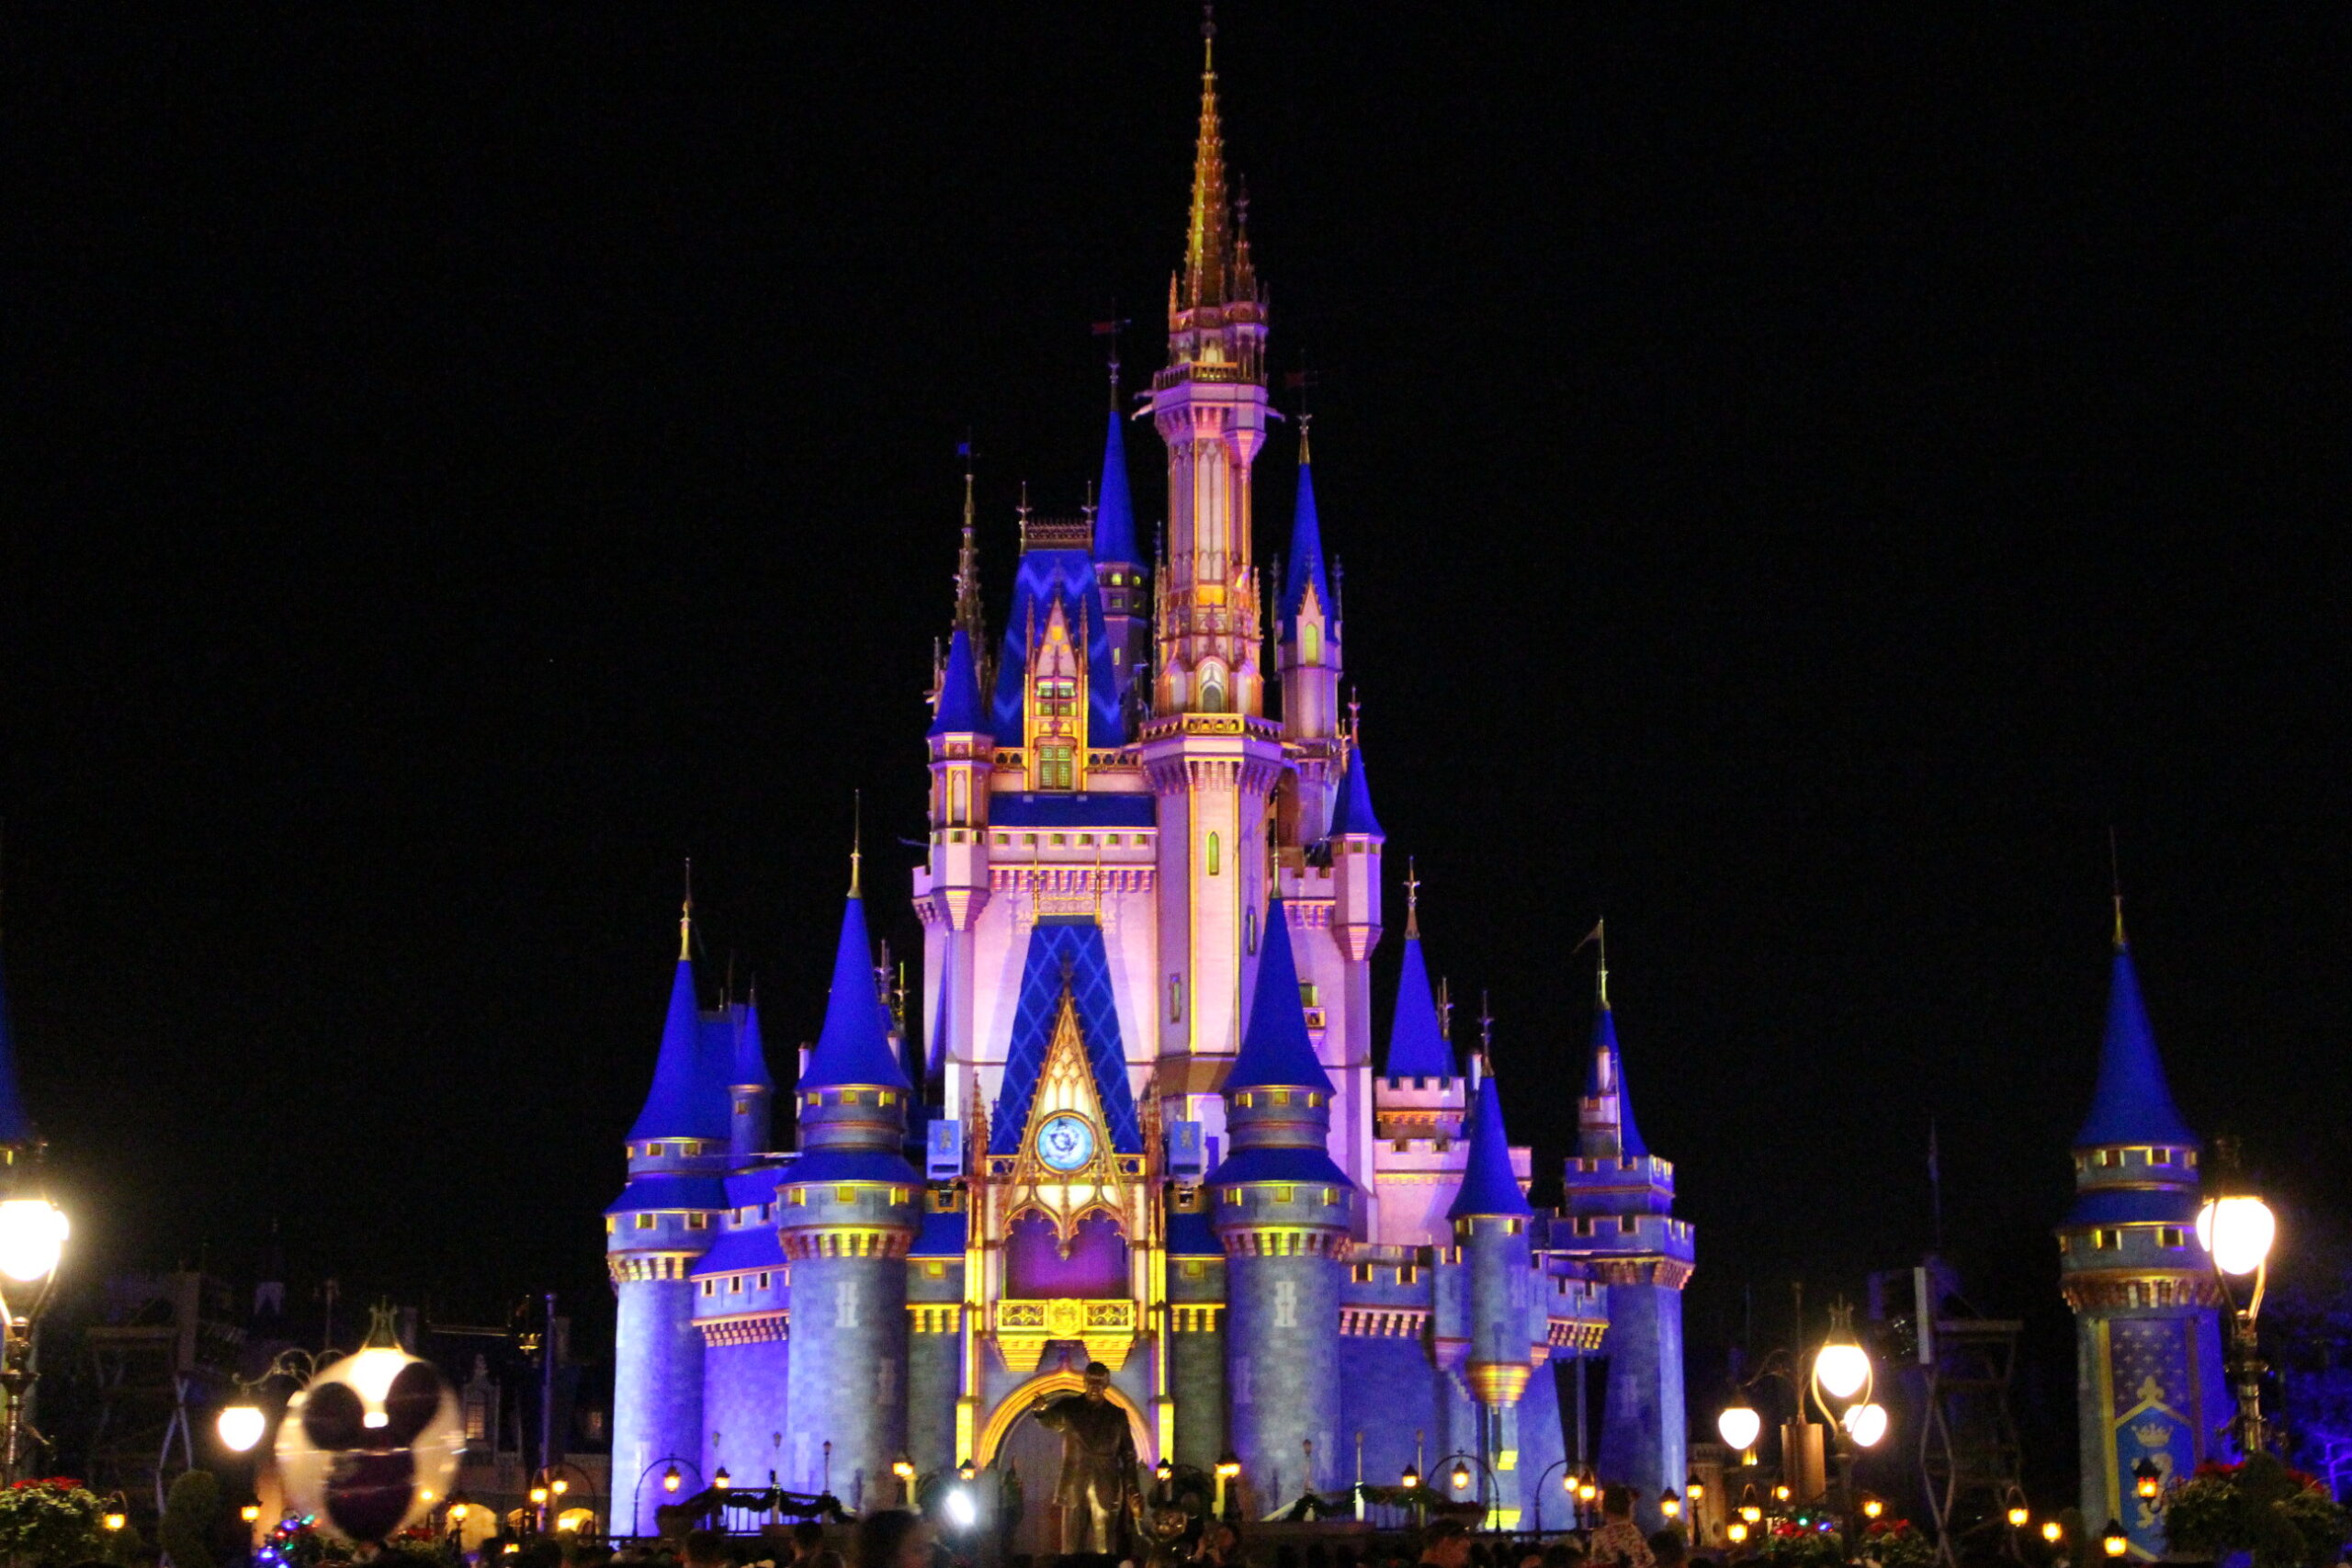 a dark night sky surrounds the Disney castle illuminated at Magic Kingdom